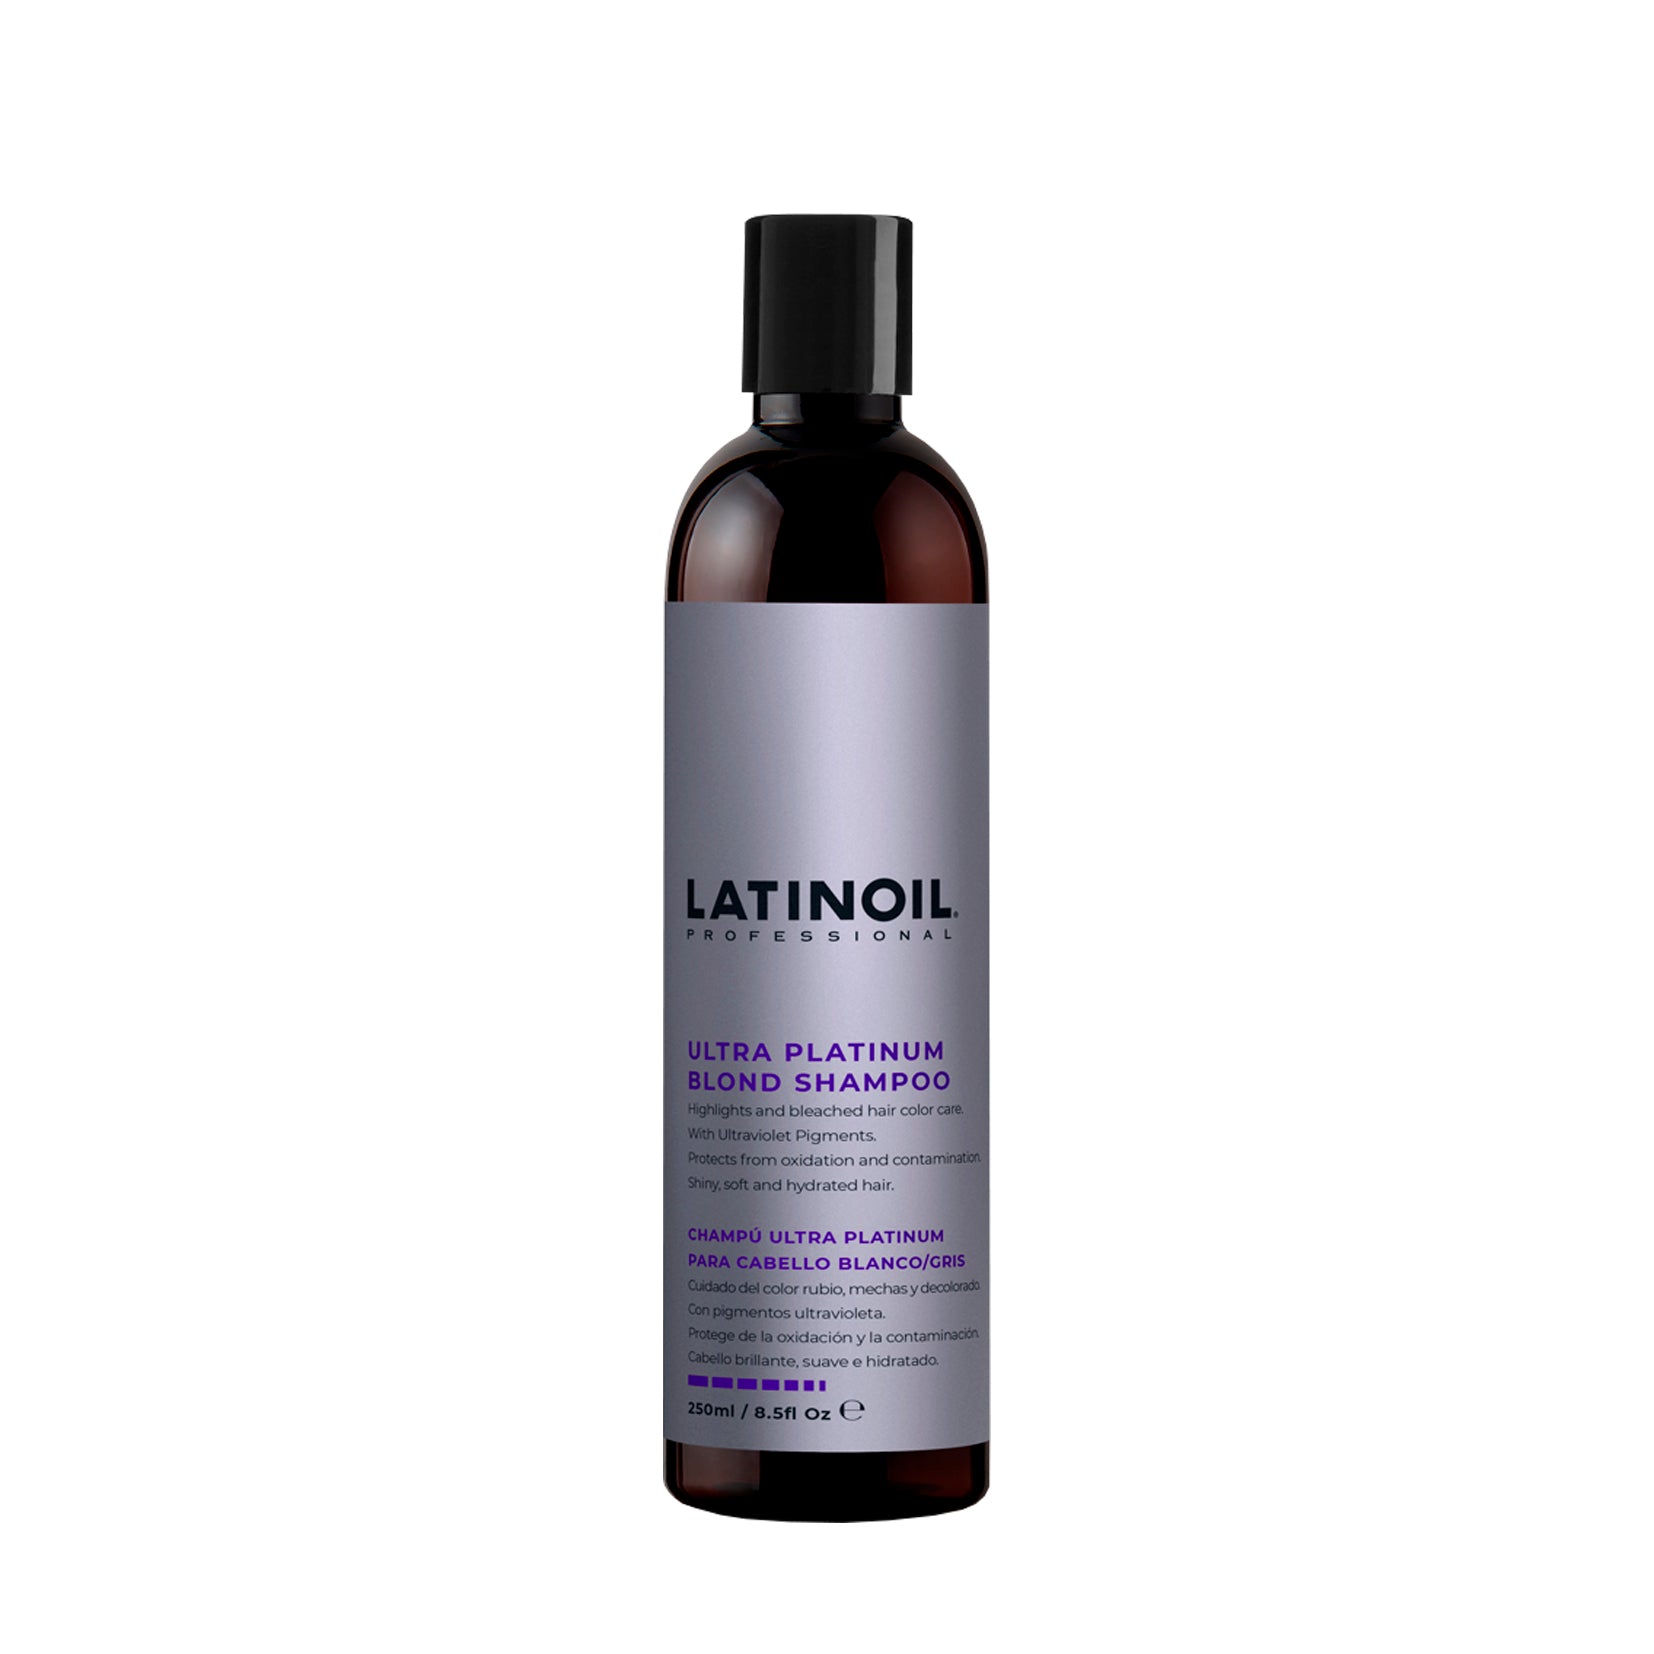 Latinoil Ultra Platinum Blond Shampoo 250ml - Matiza cabello rubio, mechaa y decoloraciones